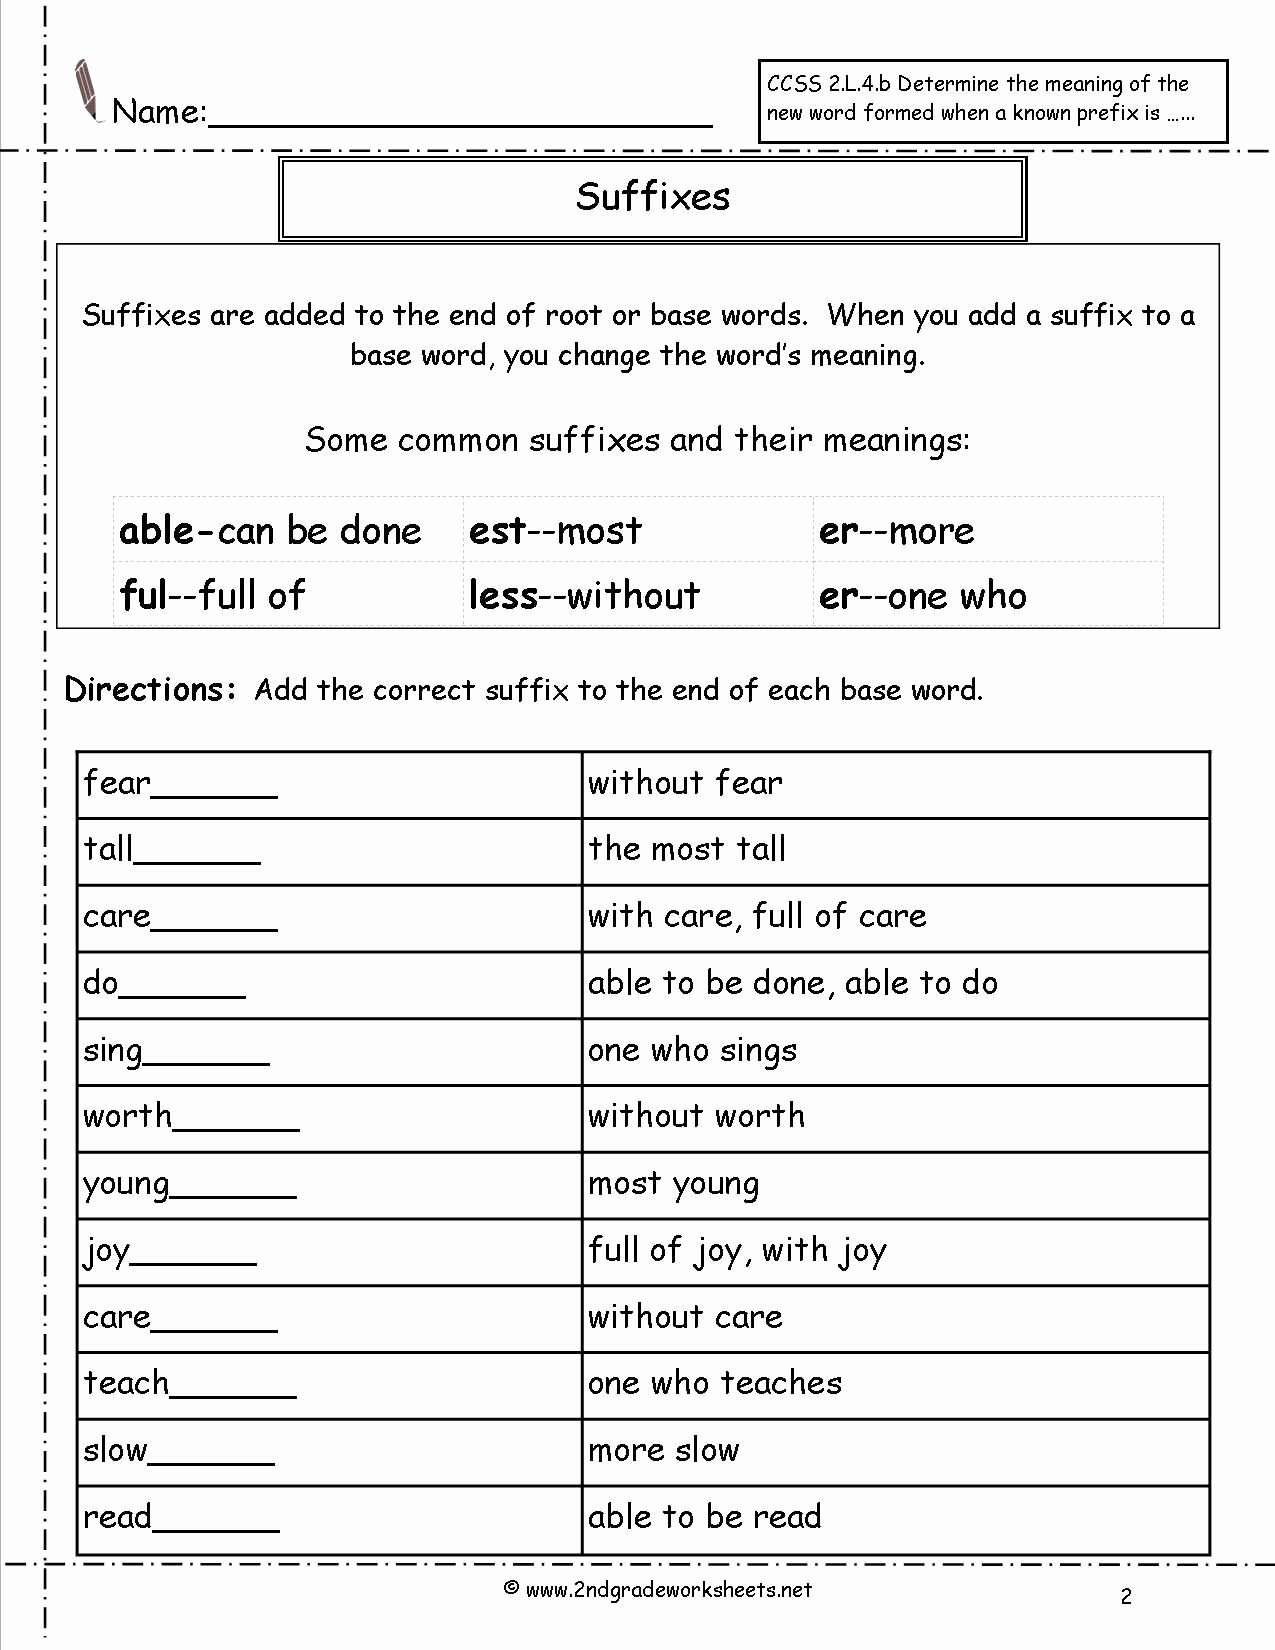 Suffix Worksheets for 4th Grade Unique 20 Suffix Worksheets for 4th Grade